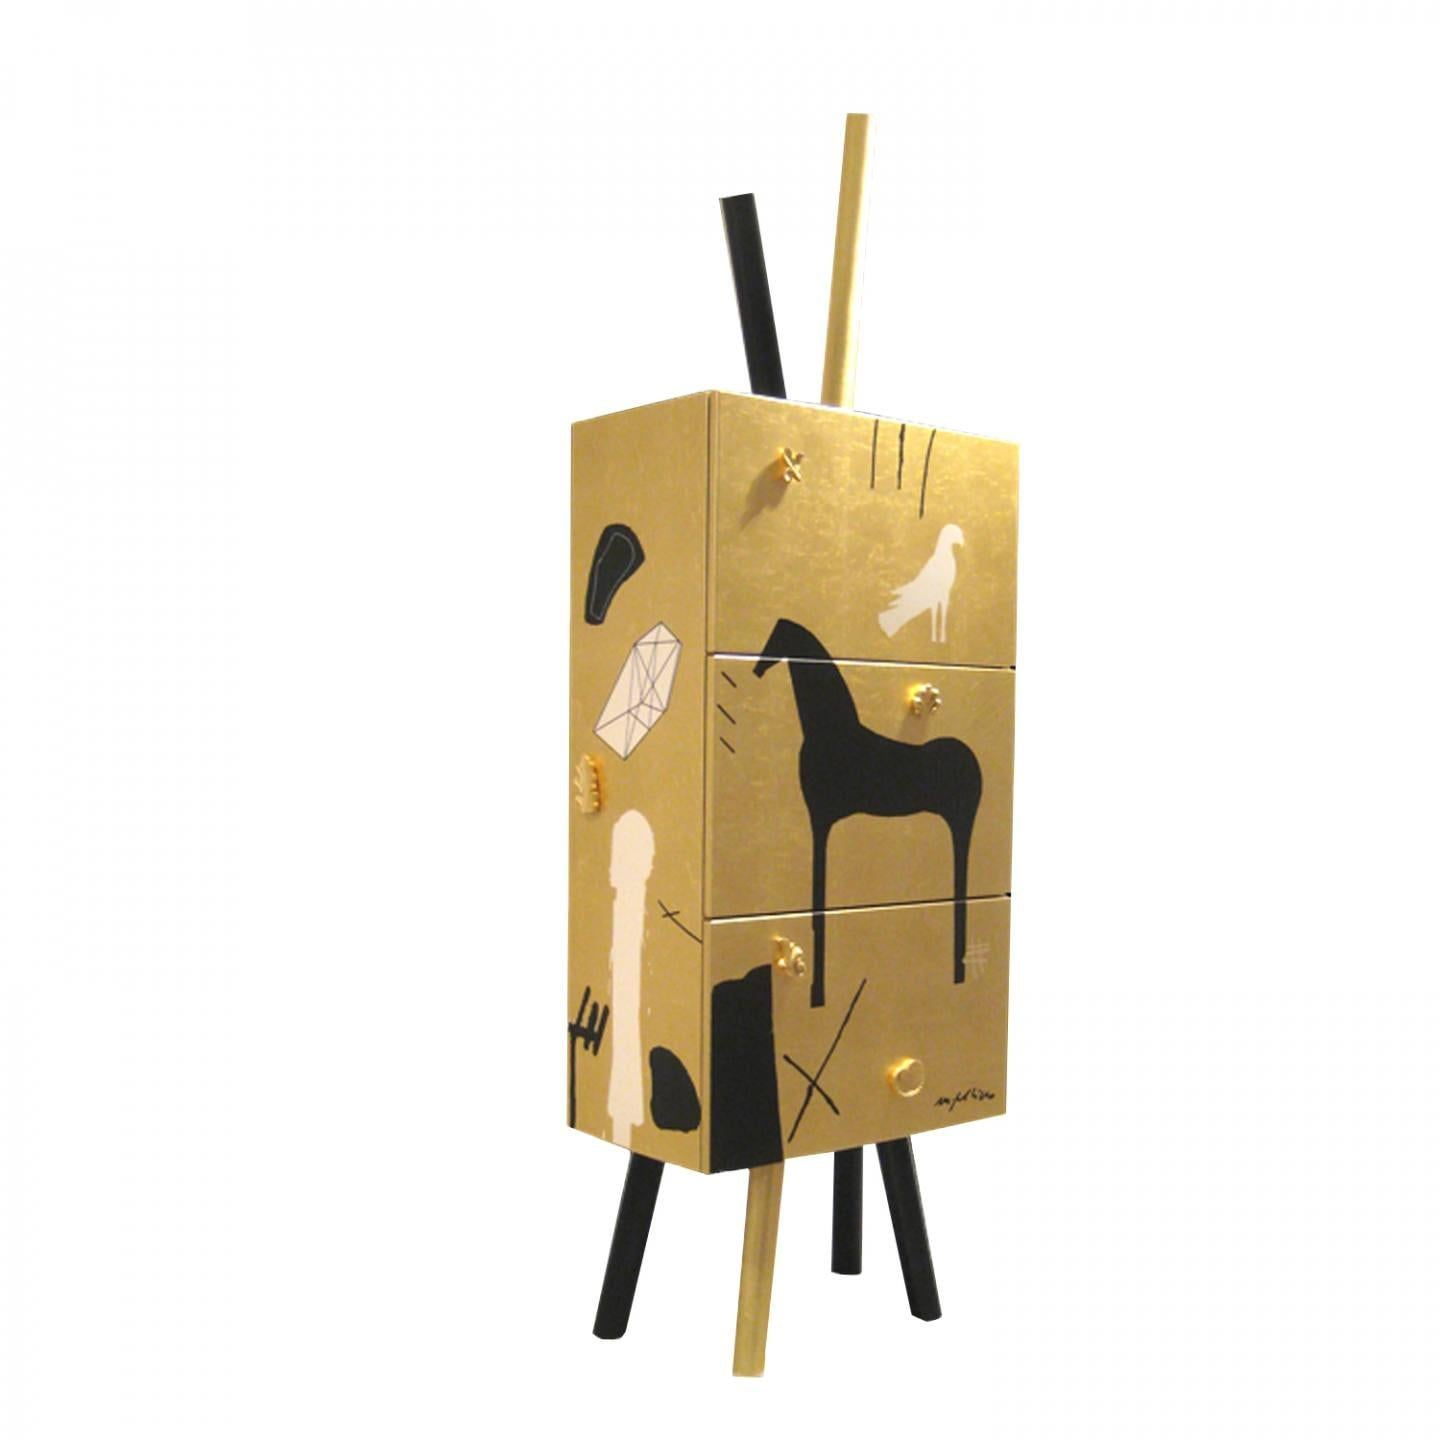 Modern Mimmo Paladino Cabinet Storage Gold Leaf Handmade Limited Edition